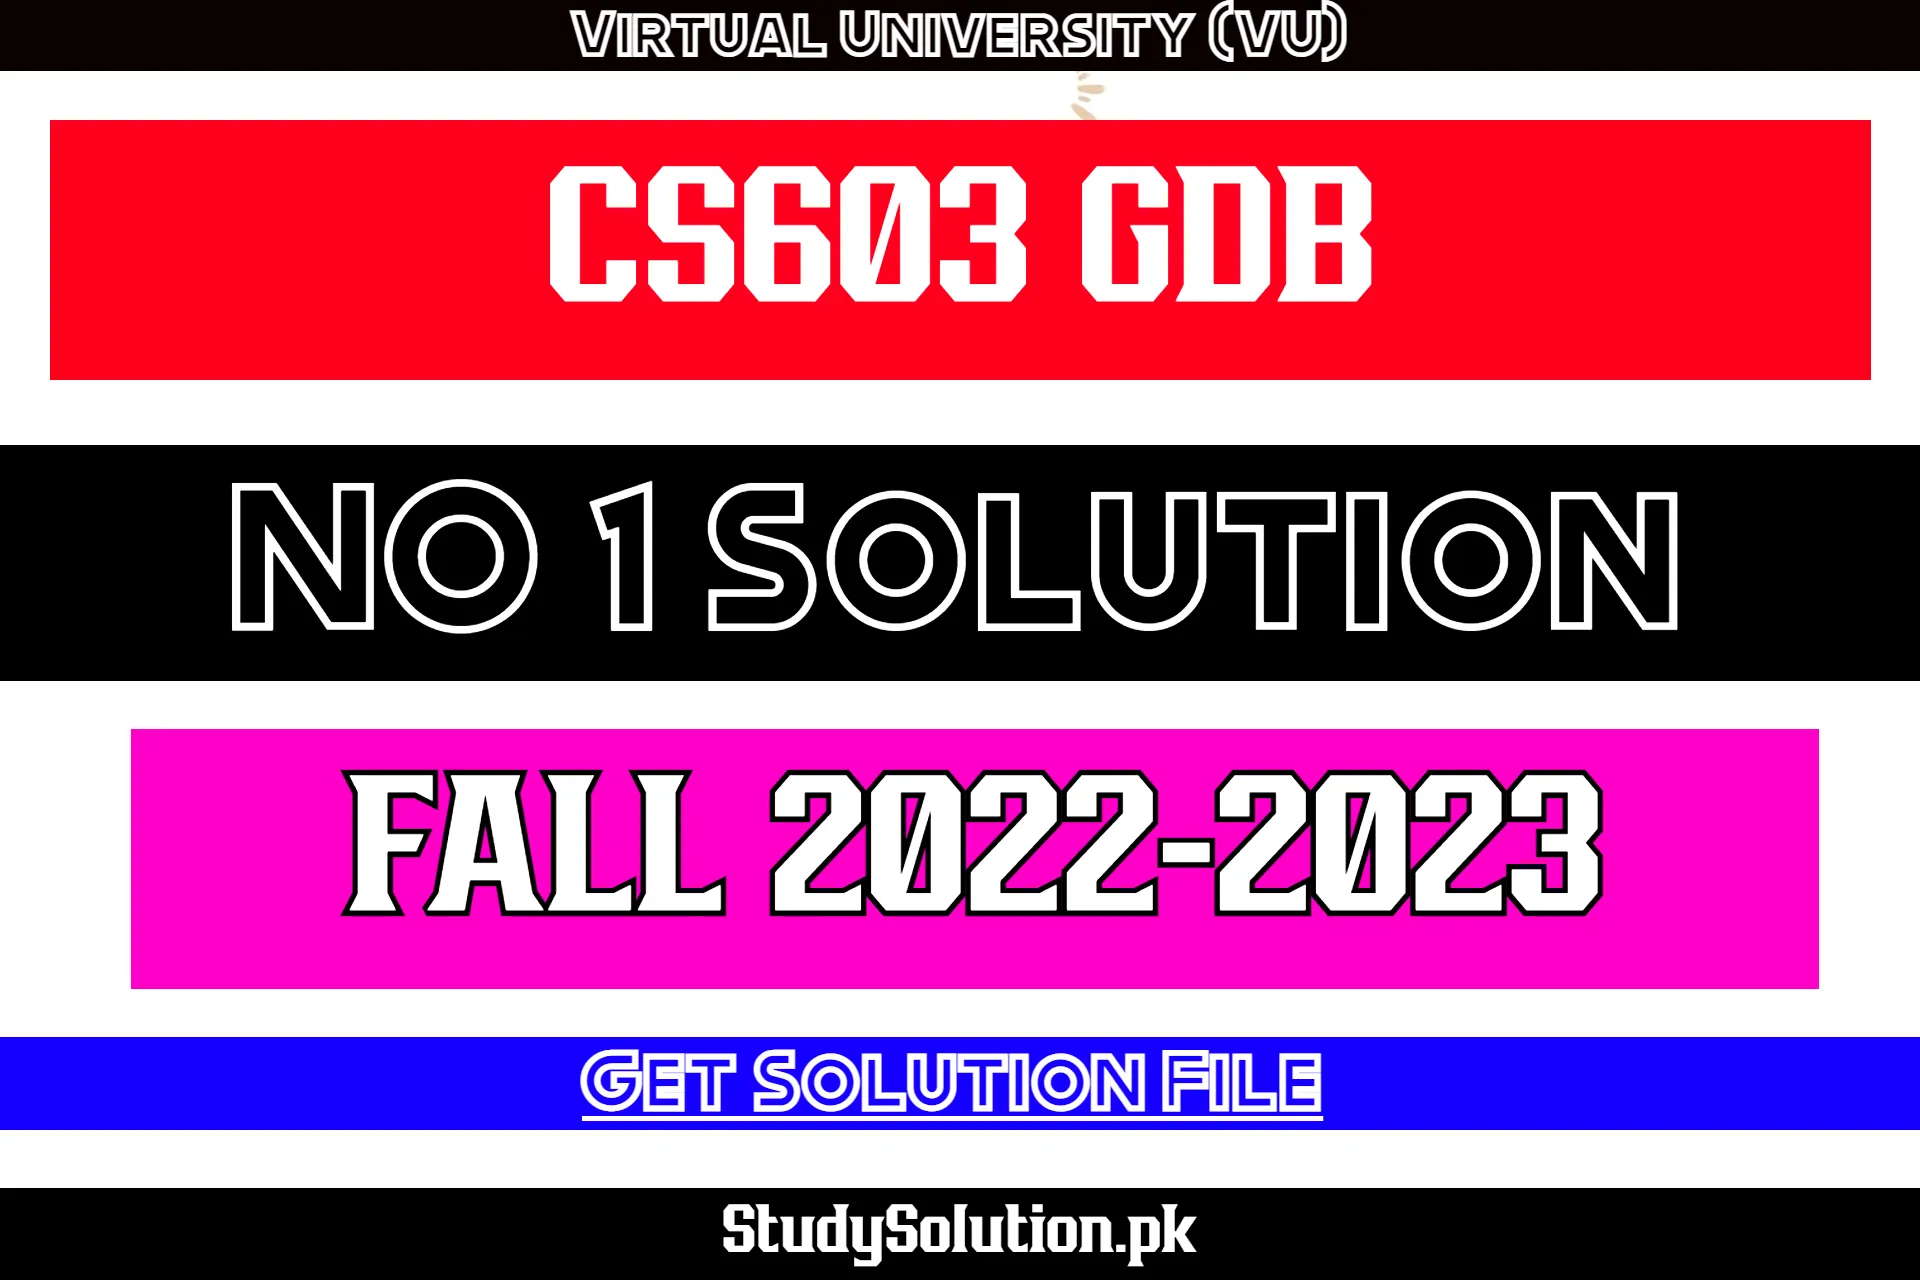 CS603 GDB No 1 Solution Fall 2022